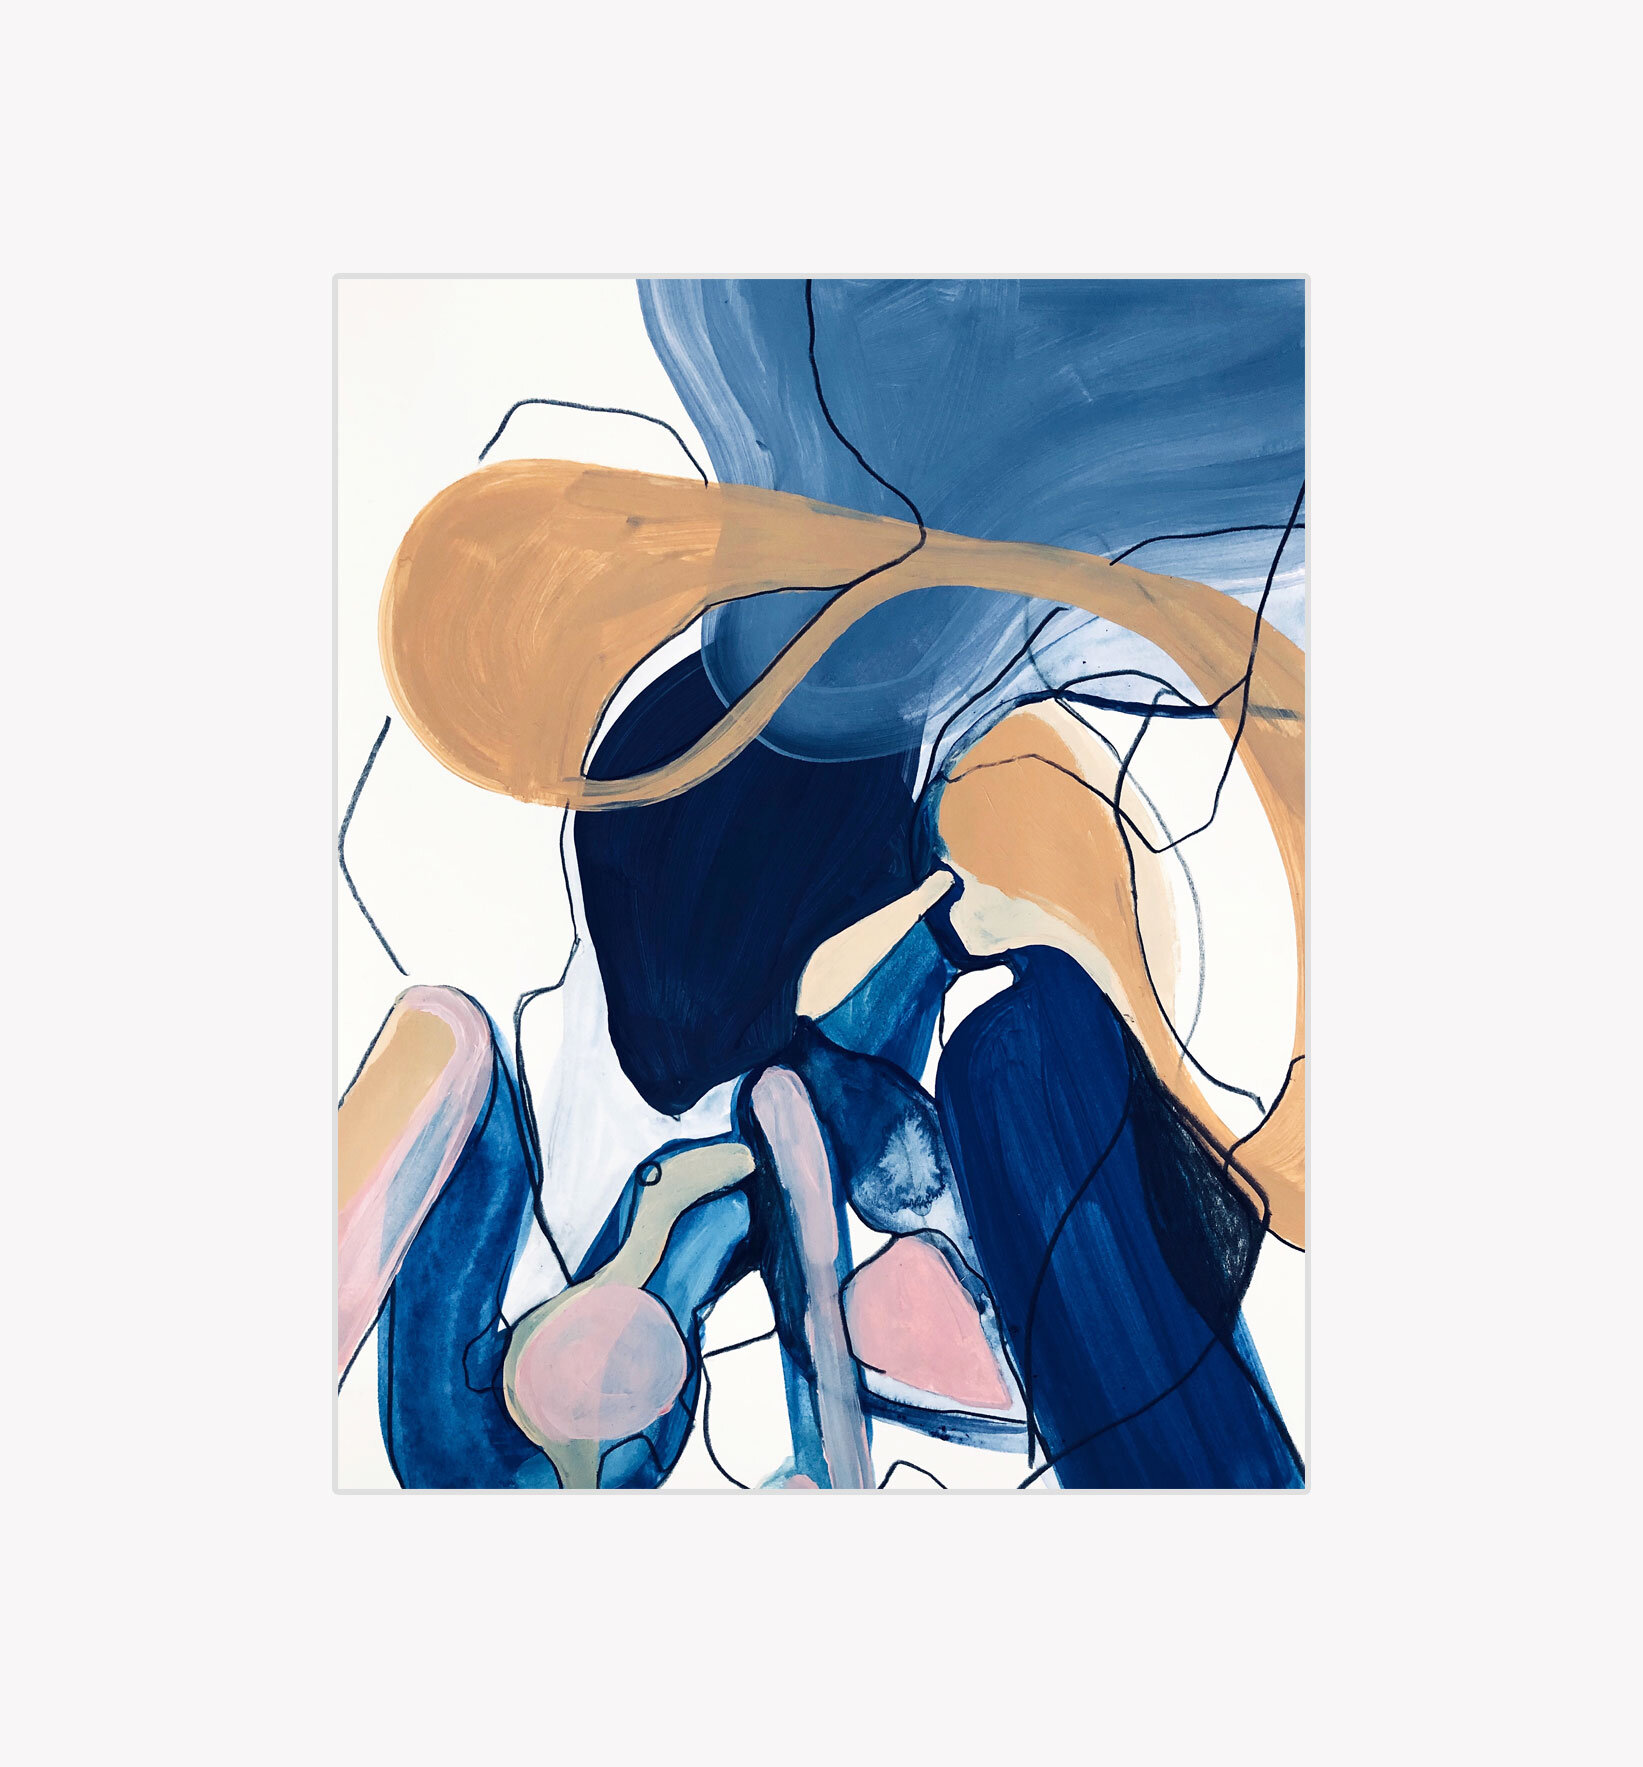   Wind,  Kristi Head 2021. Acrylic on paper, 11 x 8.5  inches. 